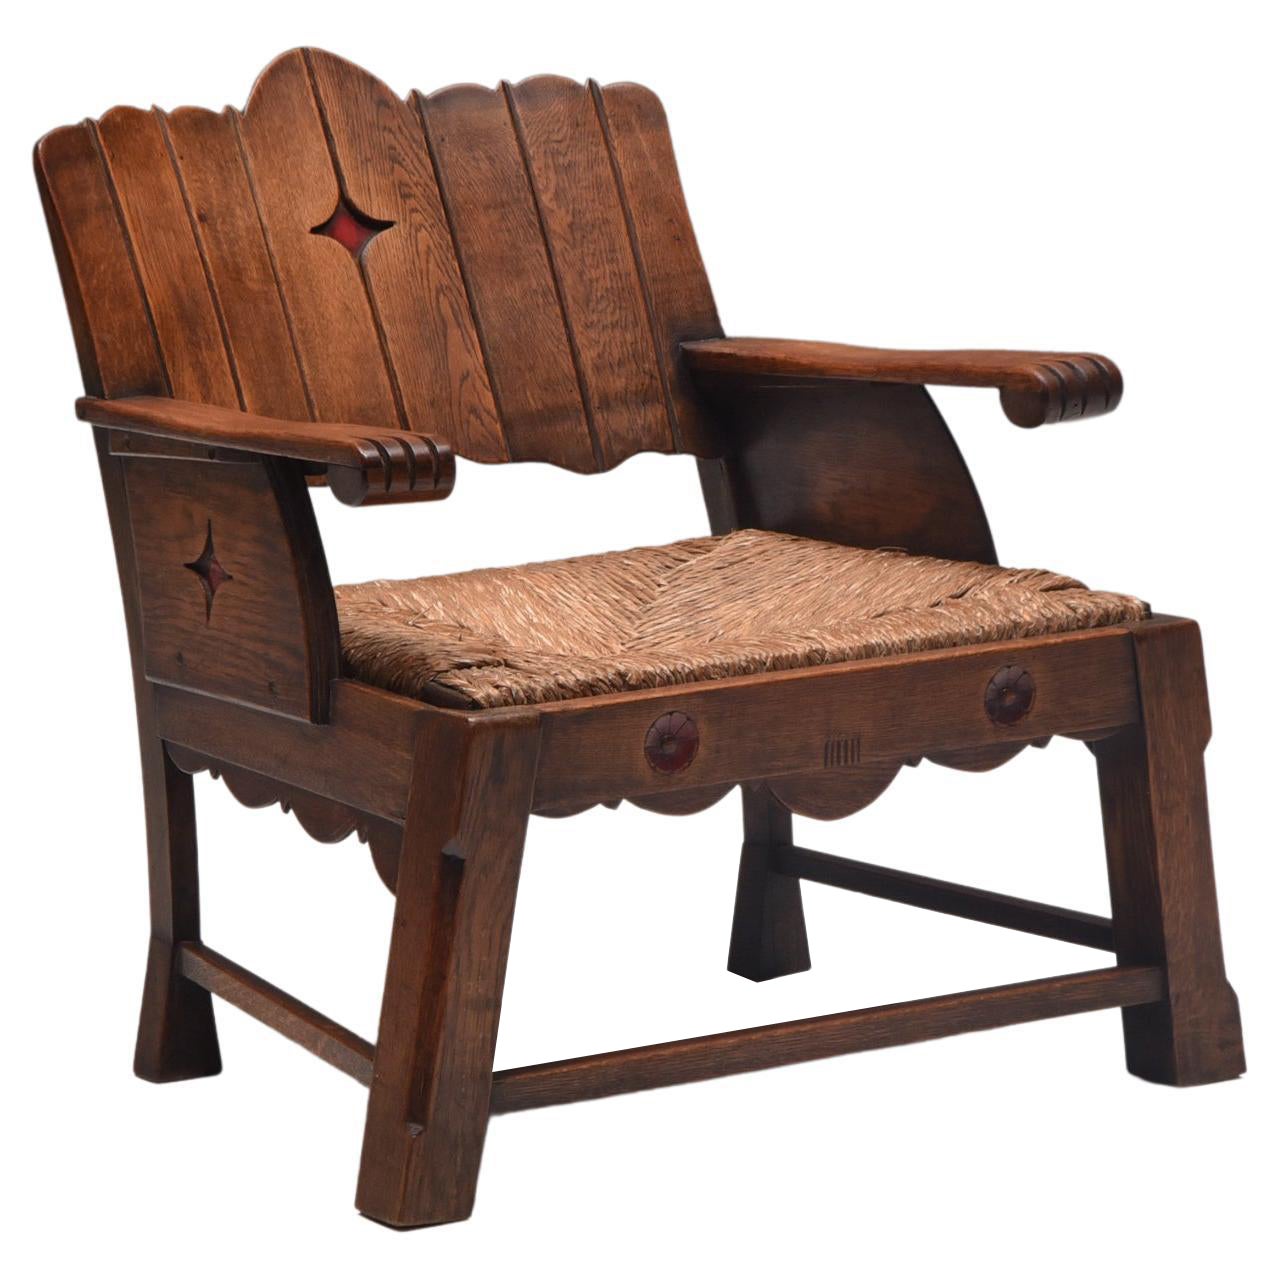 Rustic Folk Art Lounge Chair, UK, 1920s